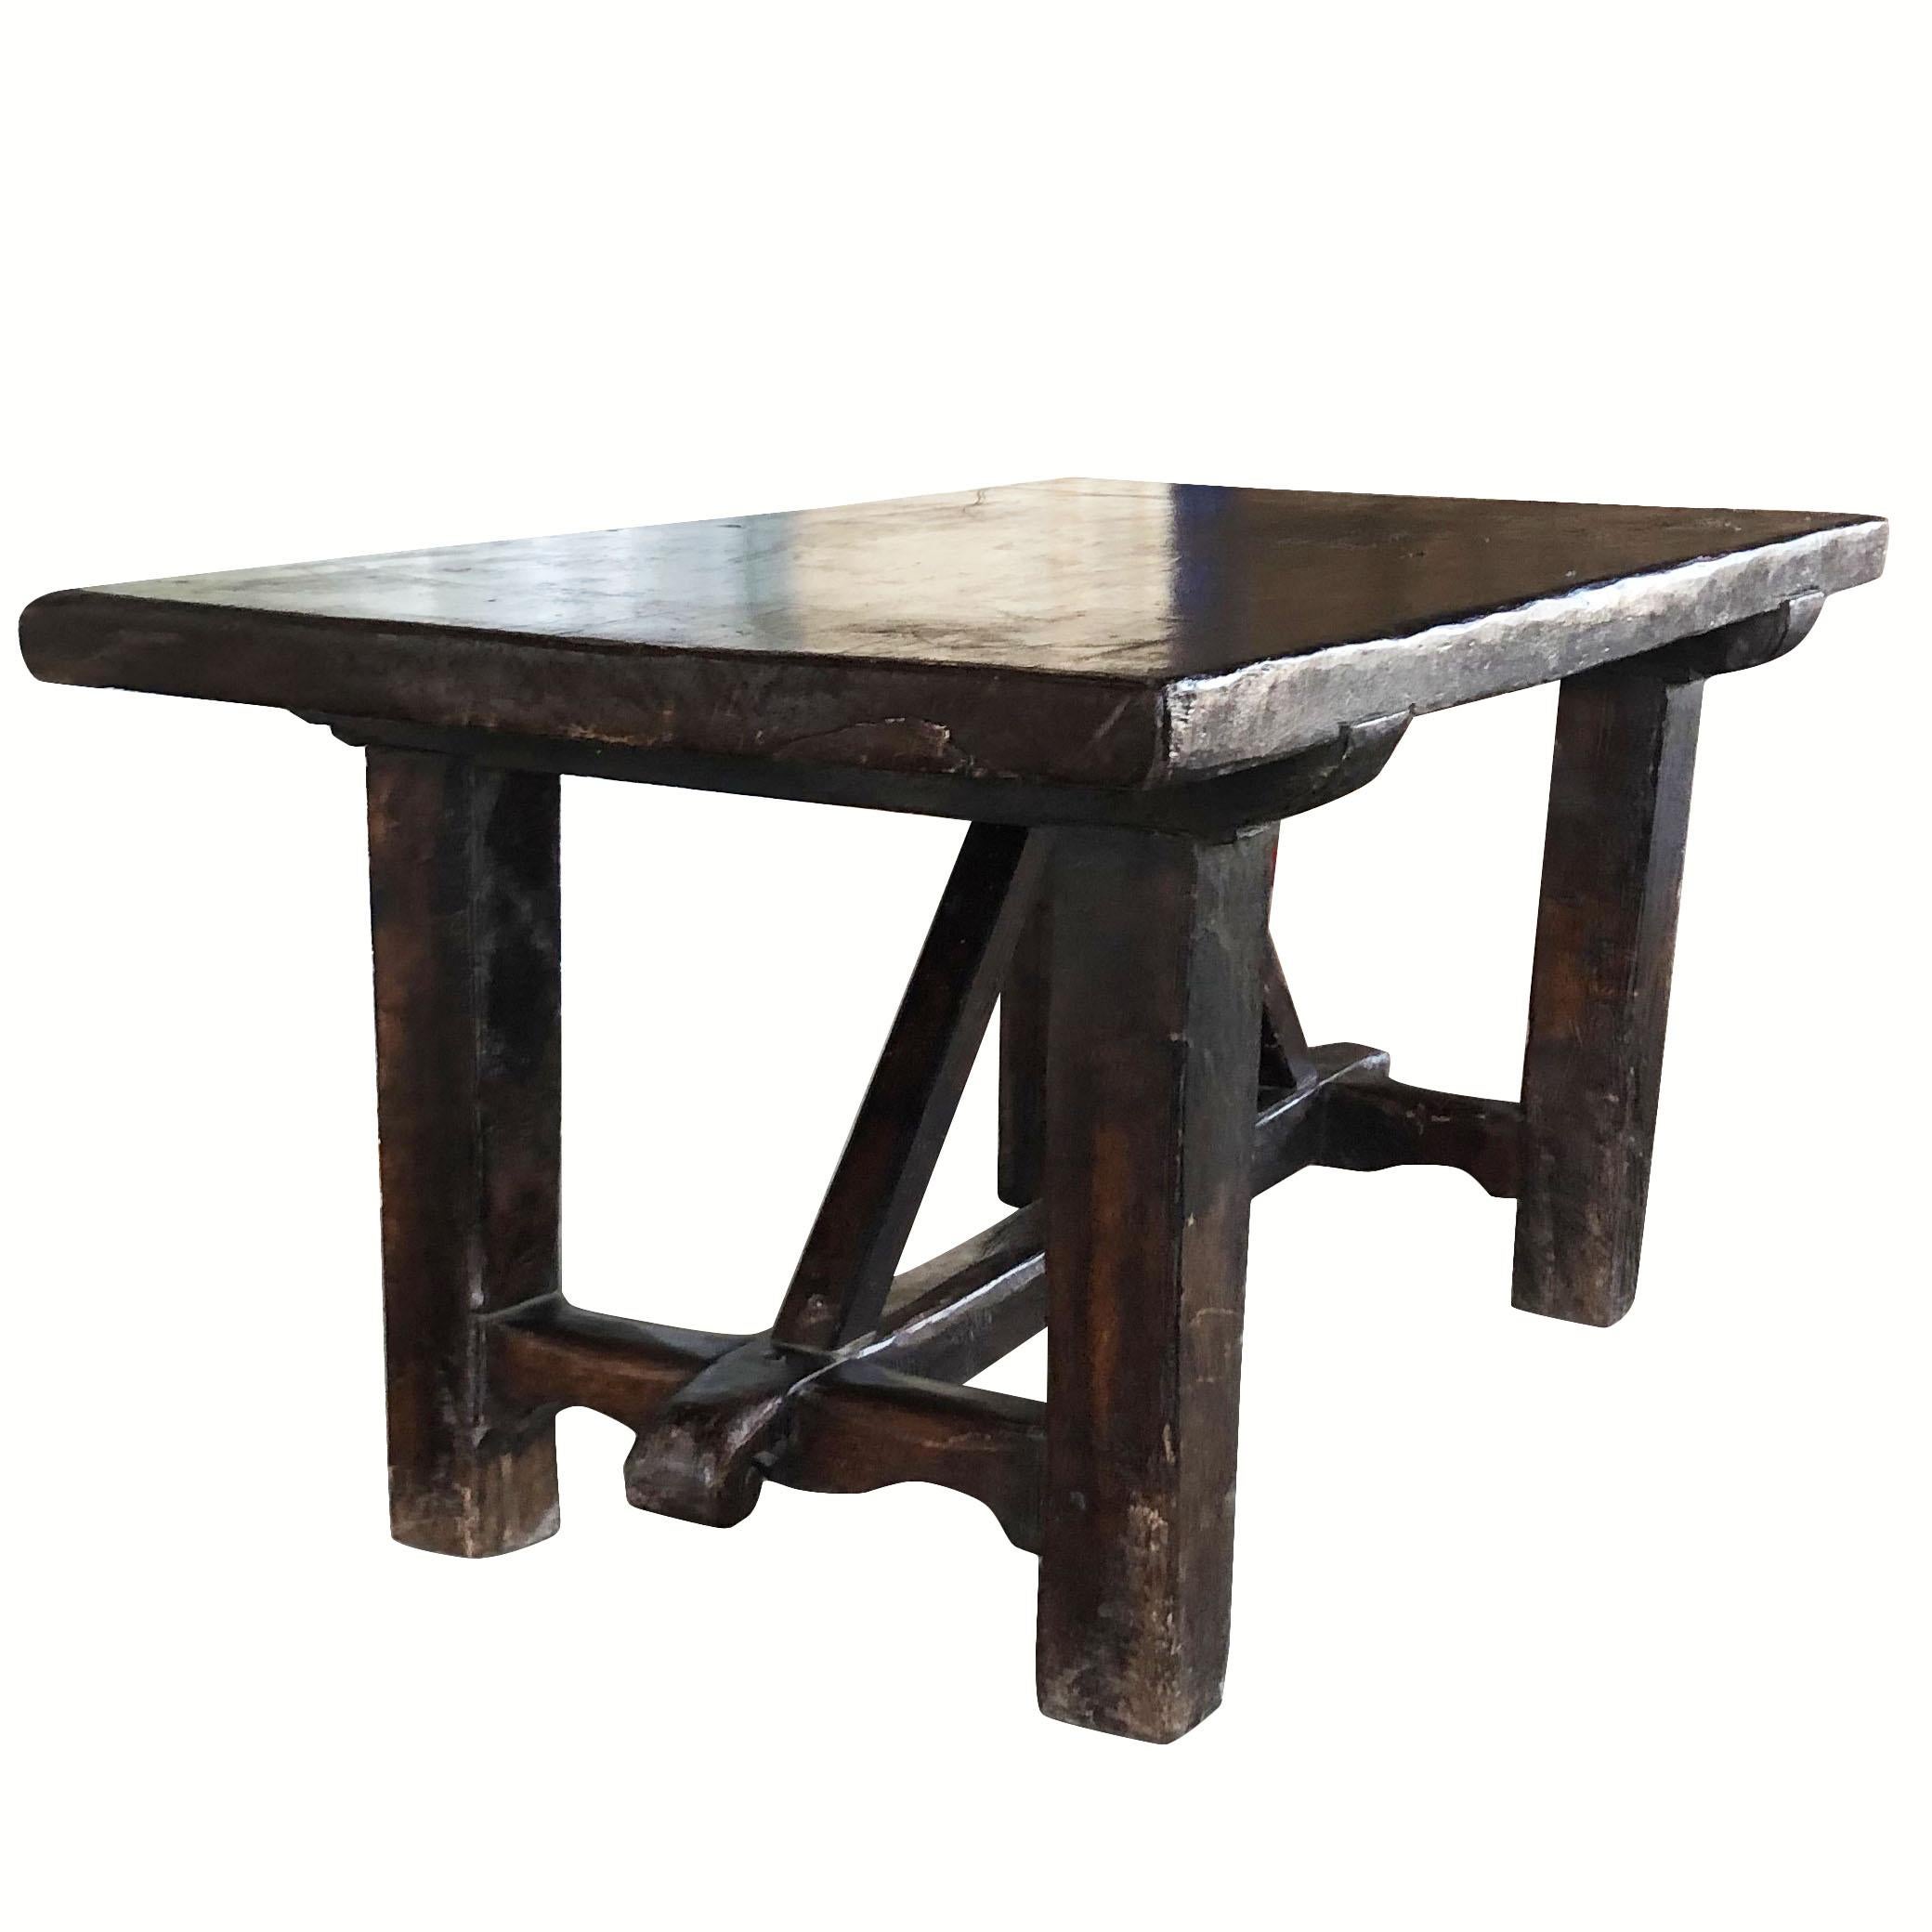 Hand-Carved 18th Century Italian Walnut Kitchen Table, Antique Tuscan Dark Waxed Farm Table